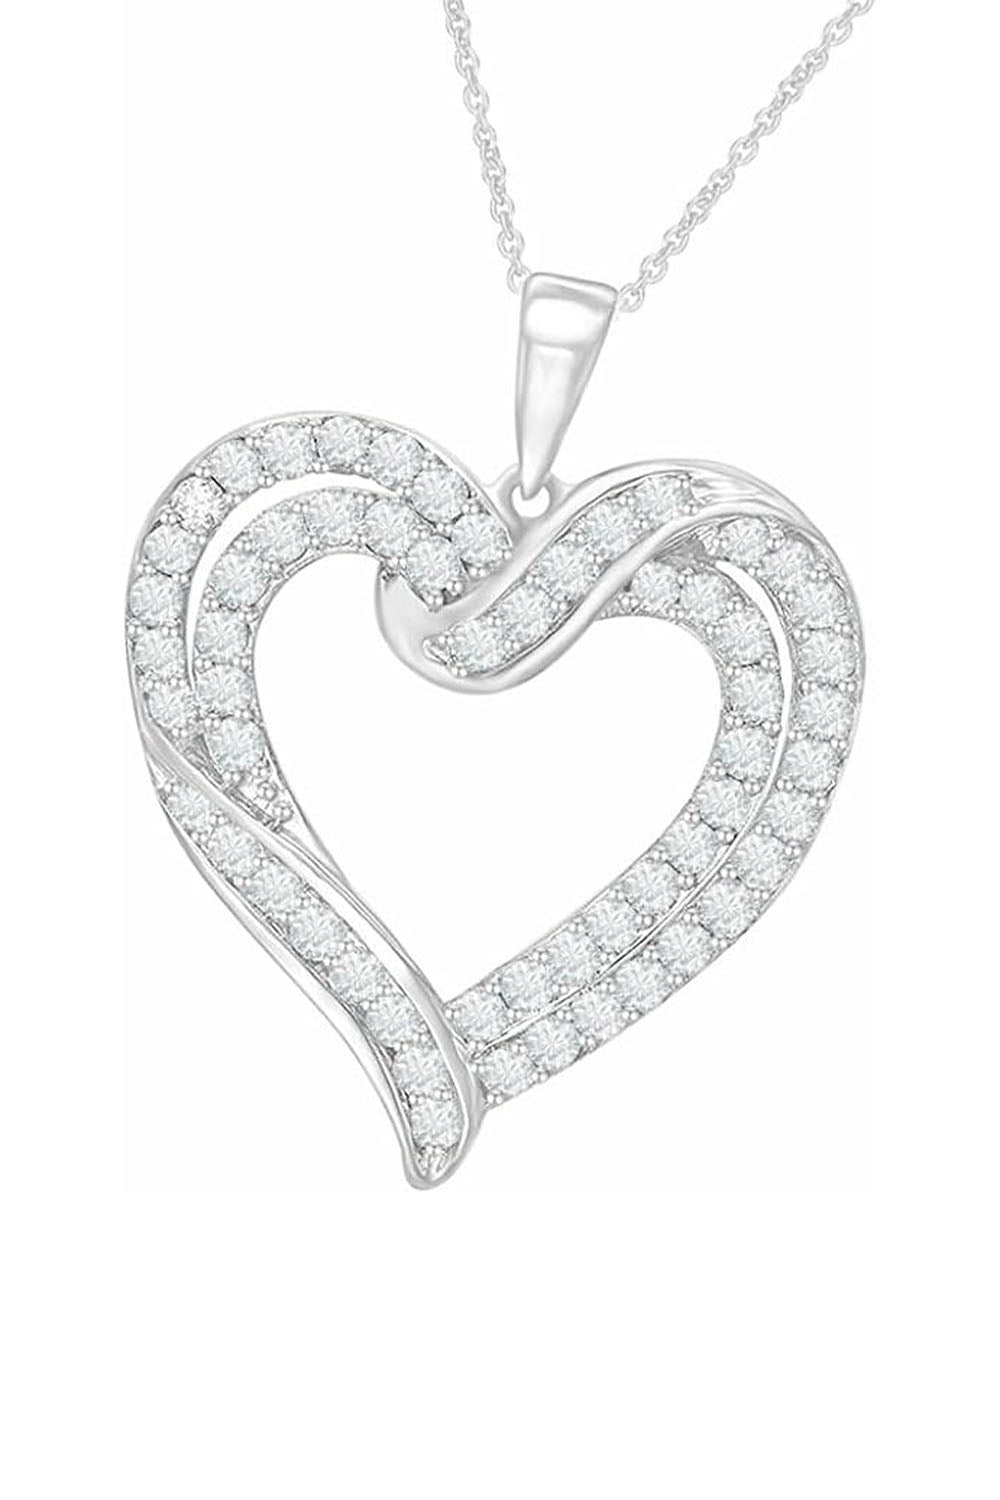 White Gold Color Round Cut Moissanite Love Heart Pendant Necklace